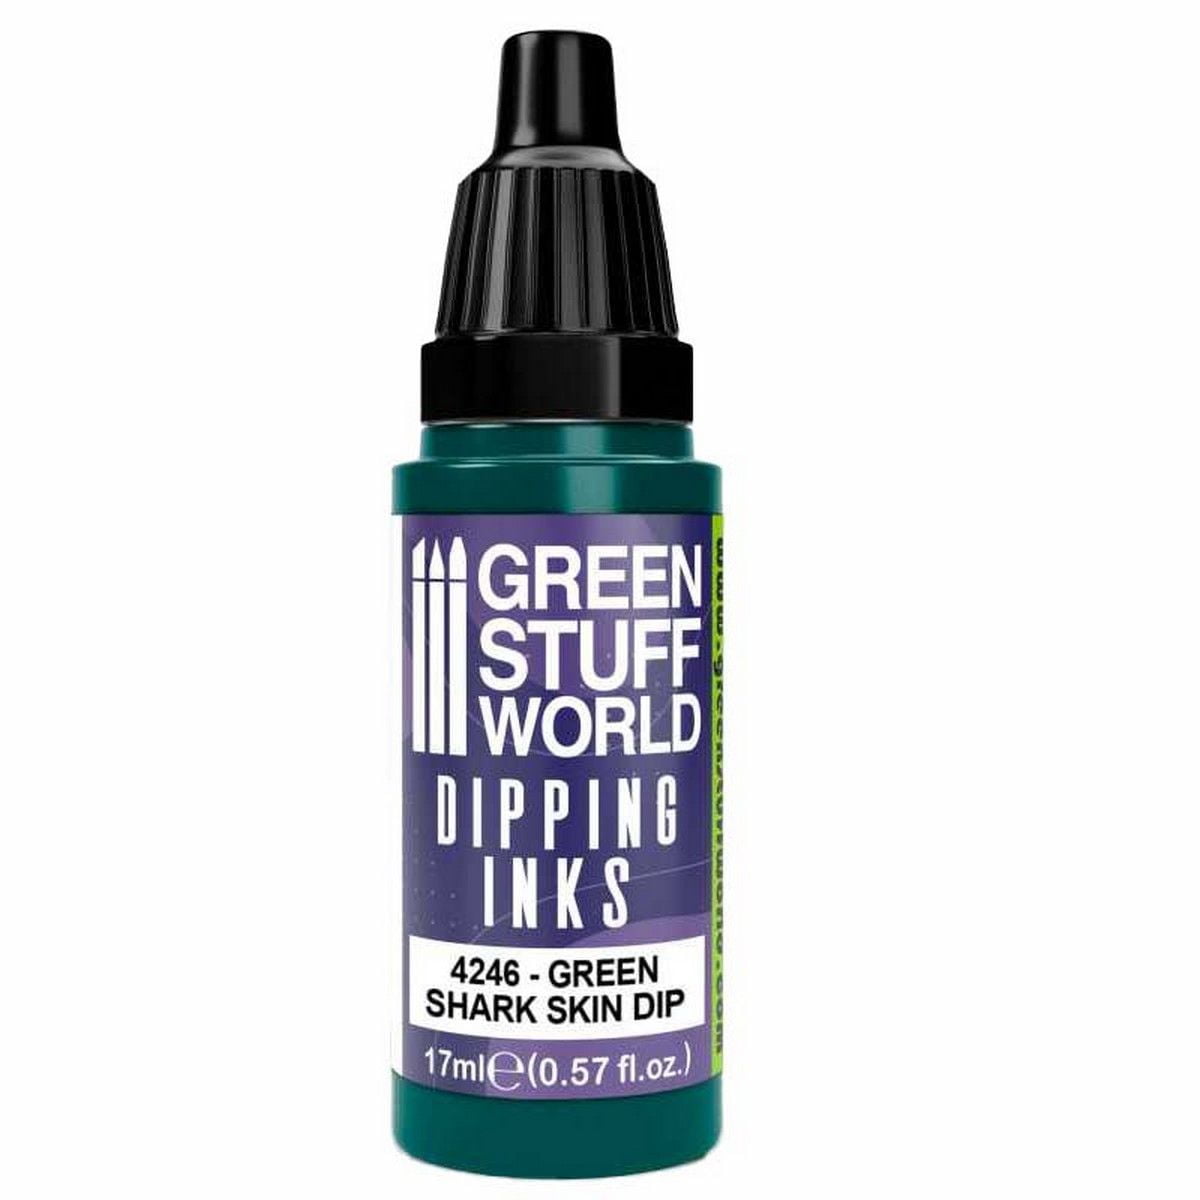 Dipping Ink 17ml - Green Shark Skin Dip